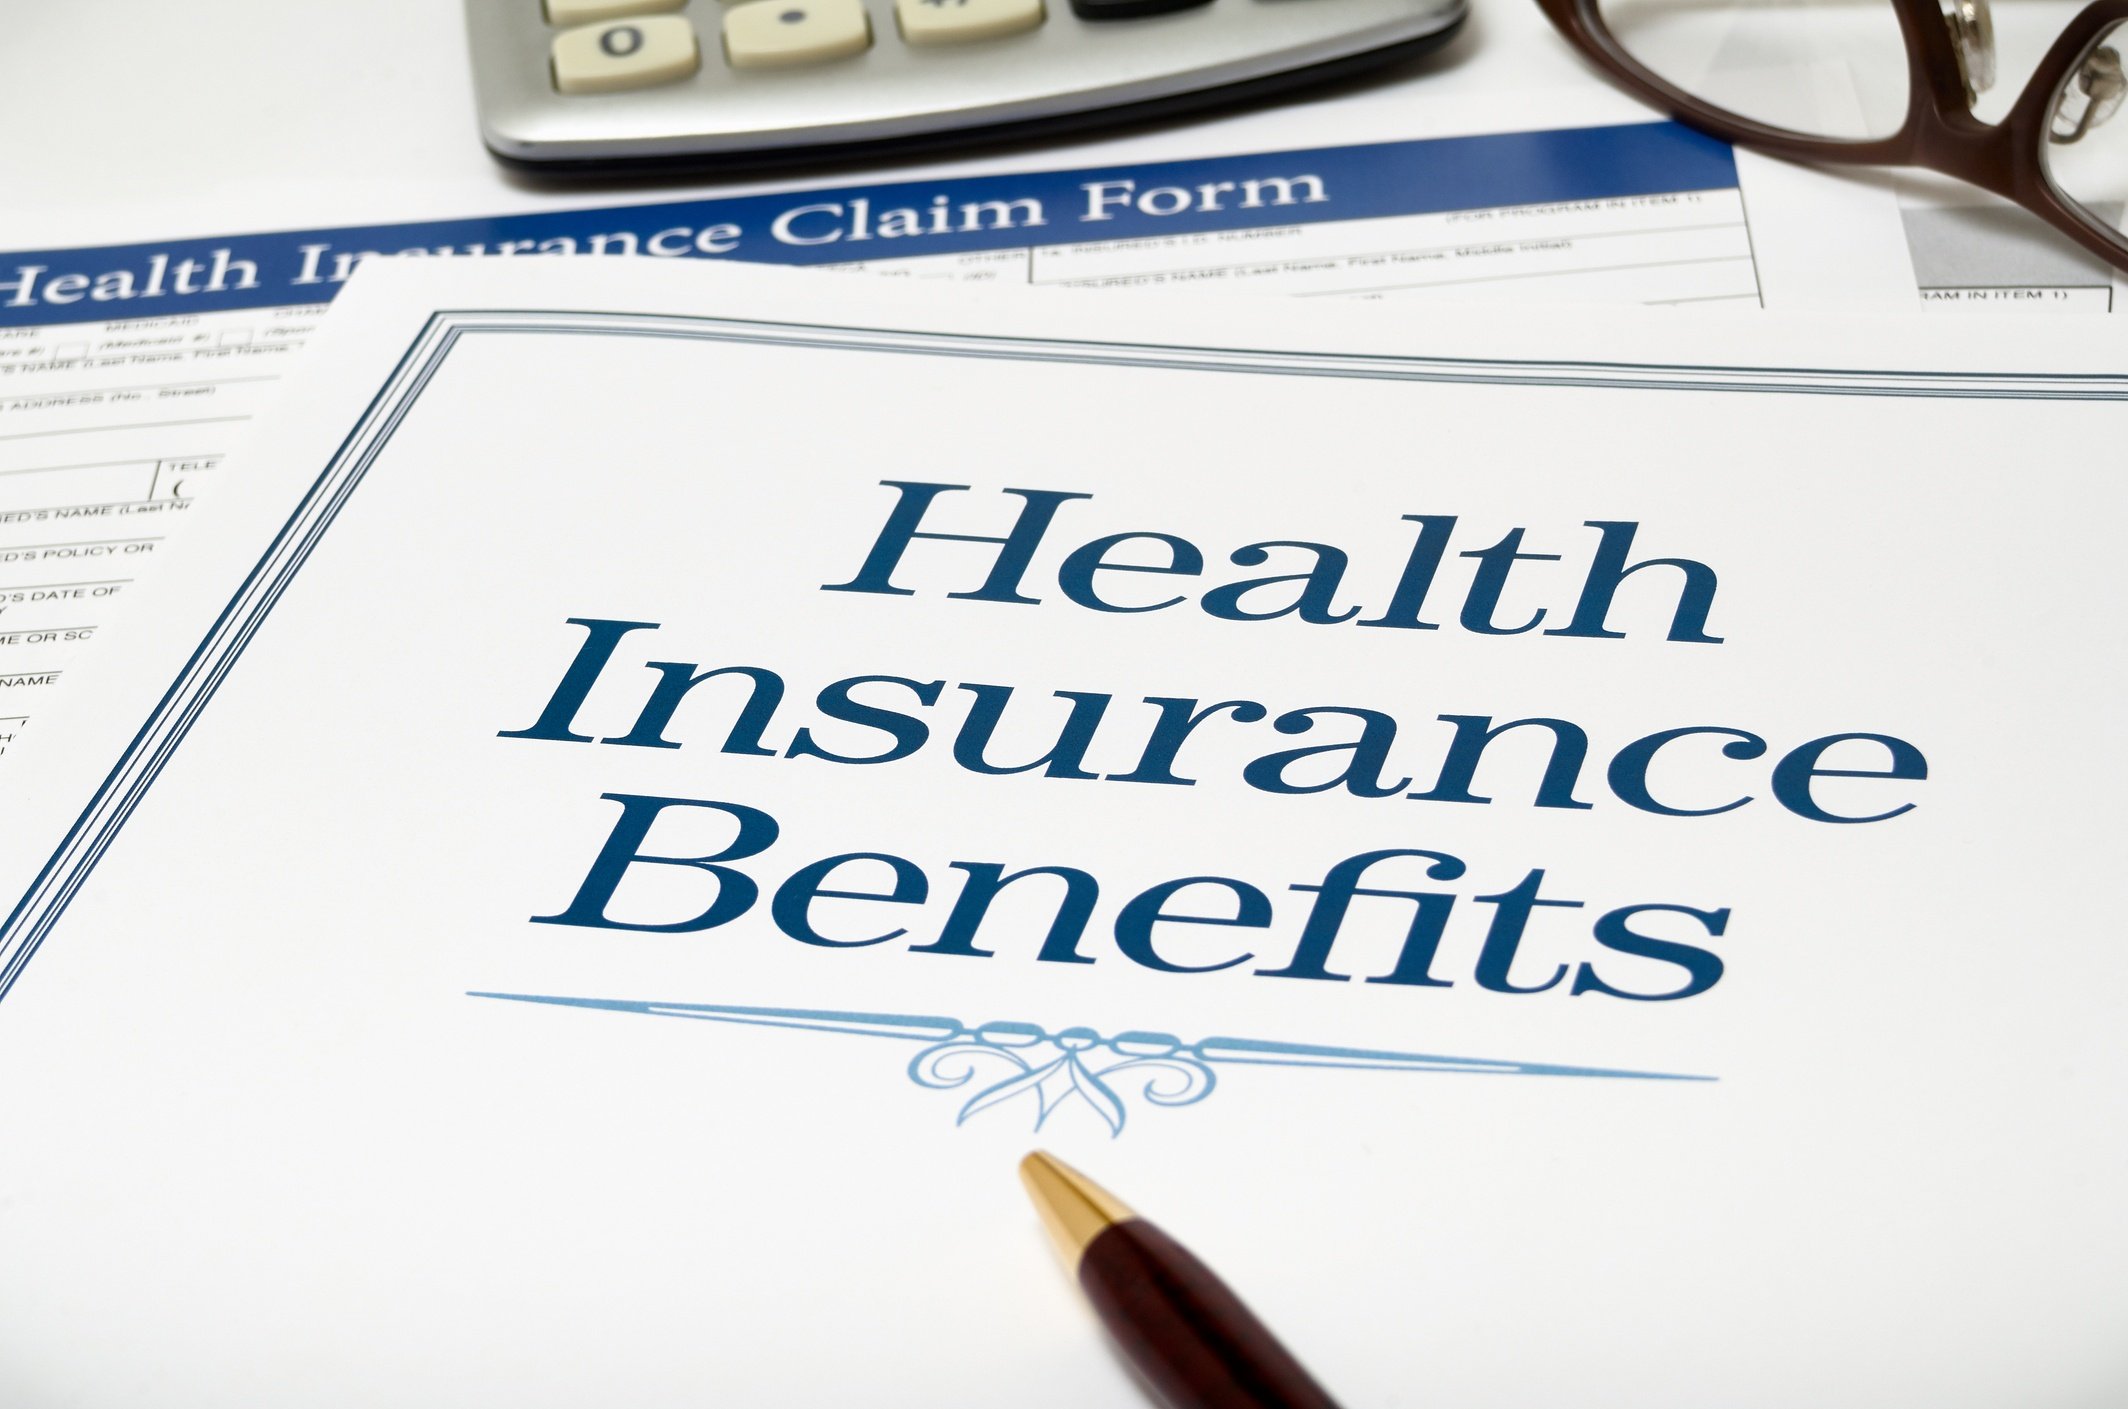 health_insurance.jpg